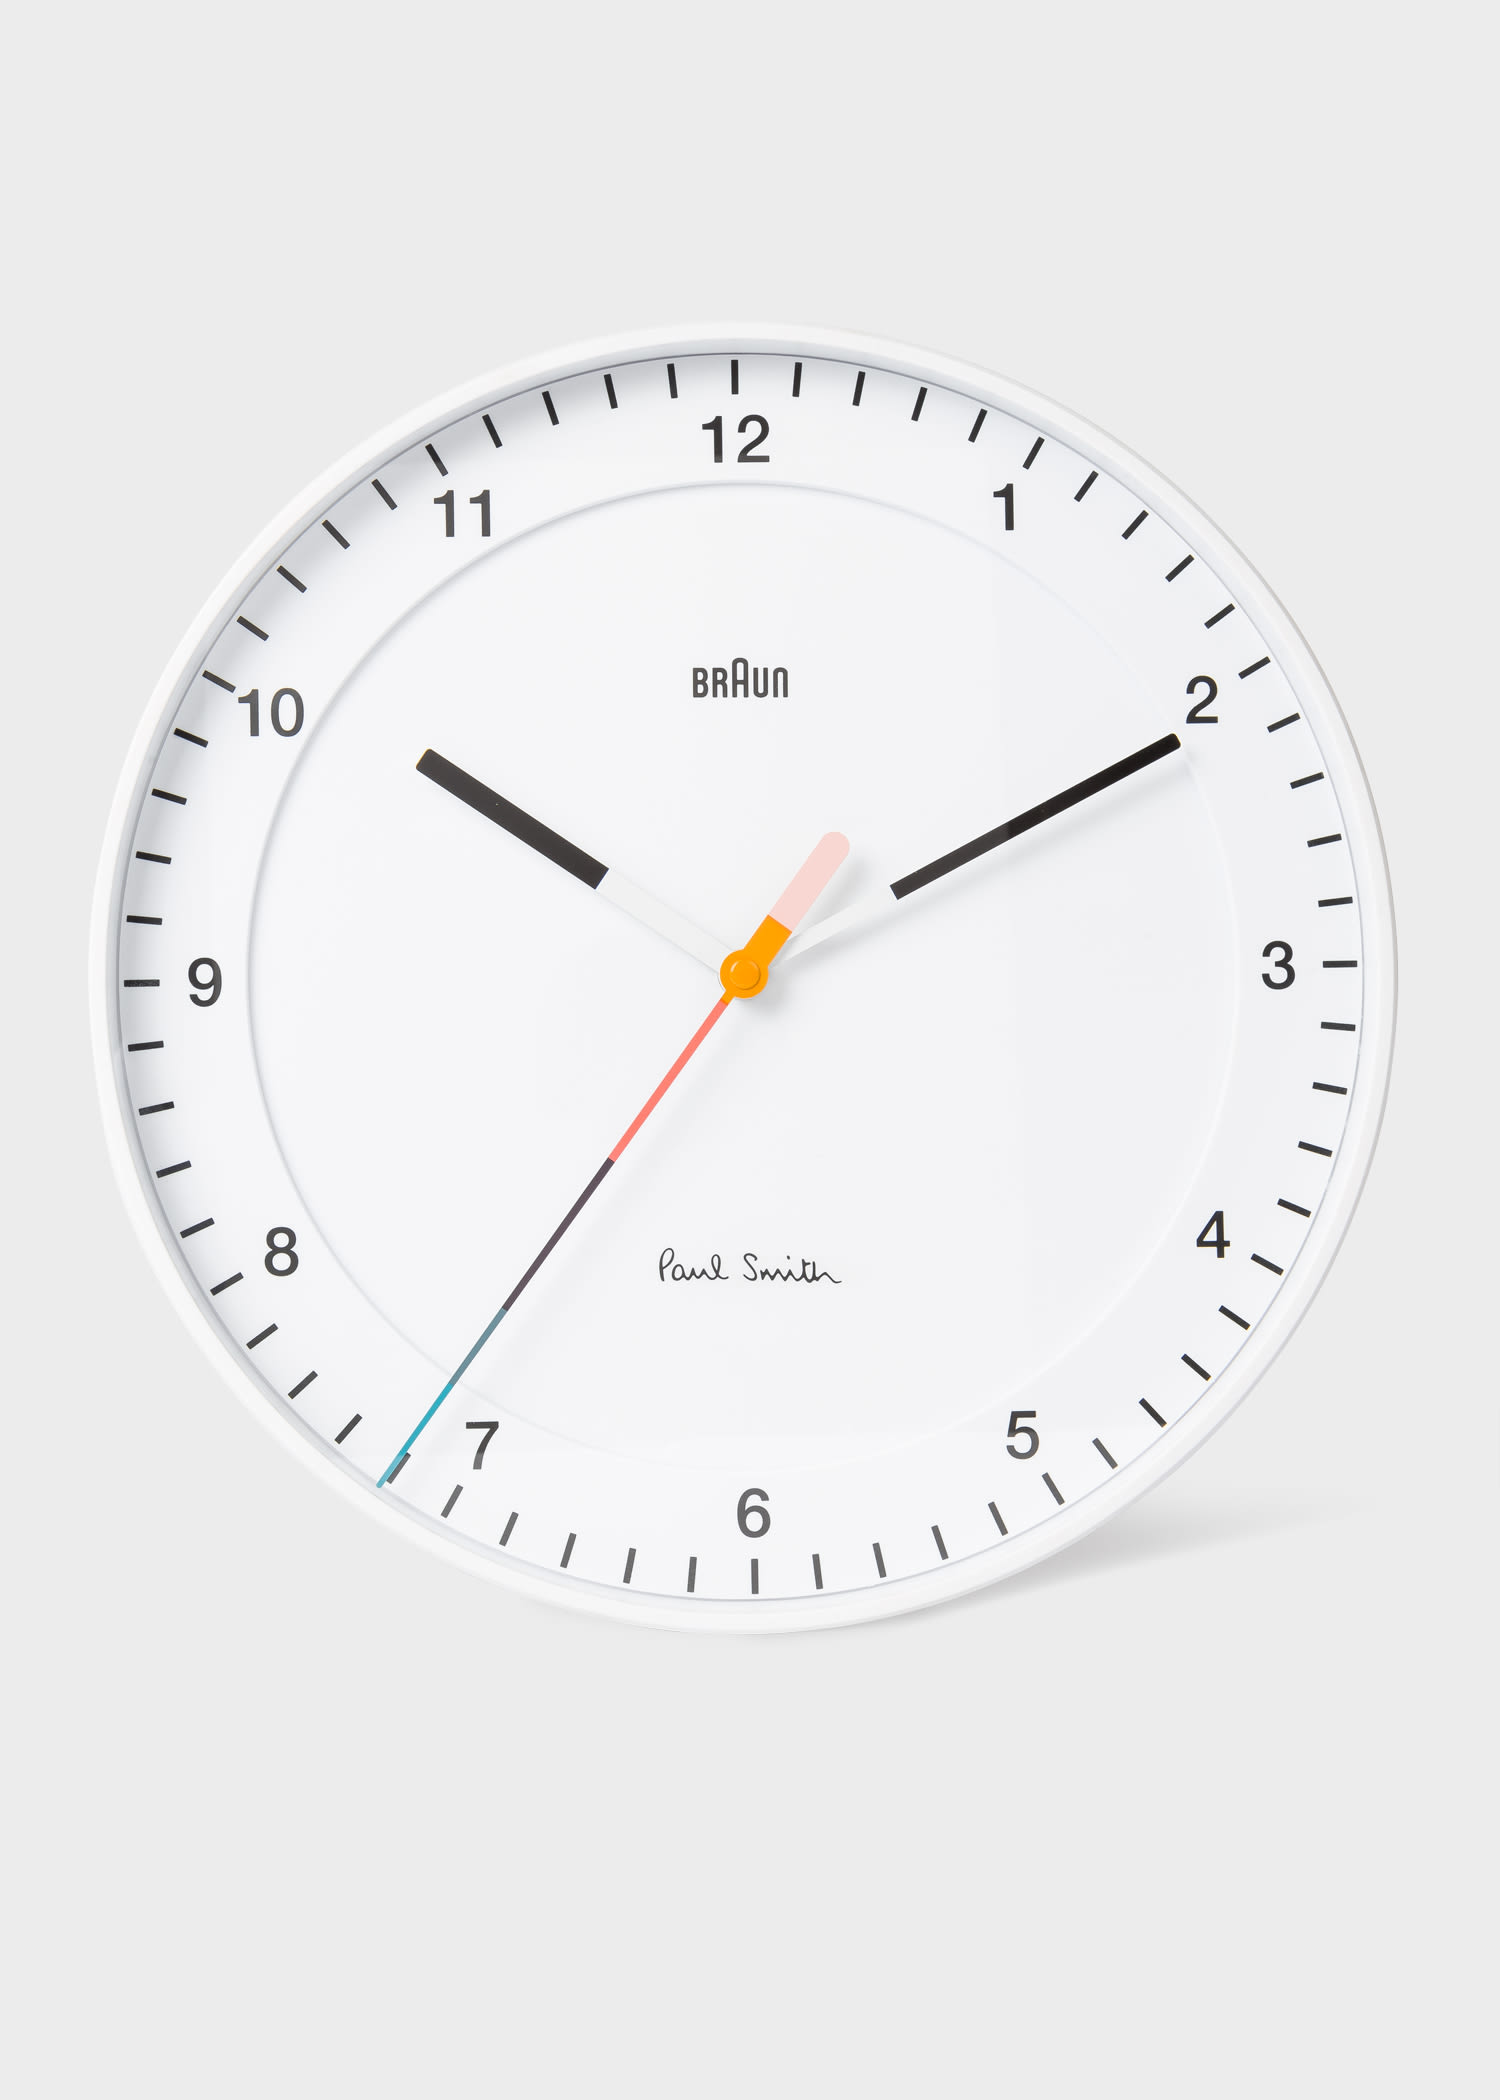 Paul Smith + Braun® White Classic Large Analogue Quartz Wall Clock.